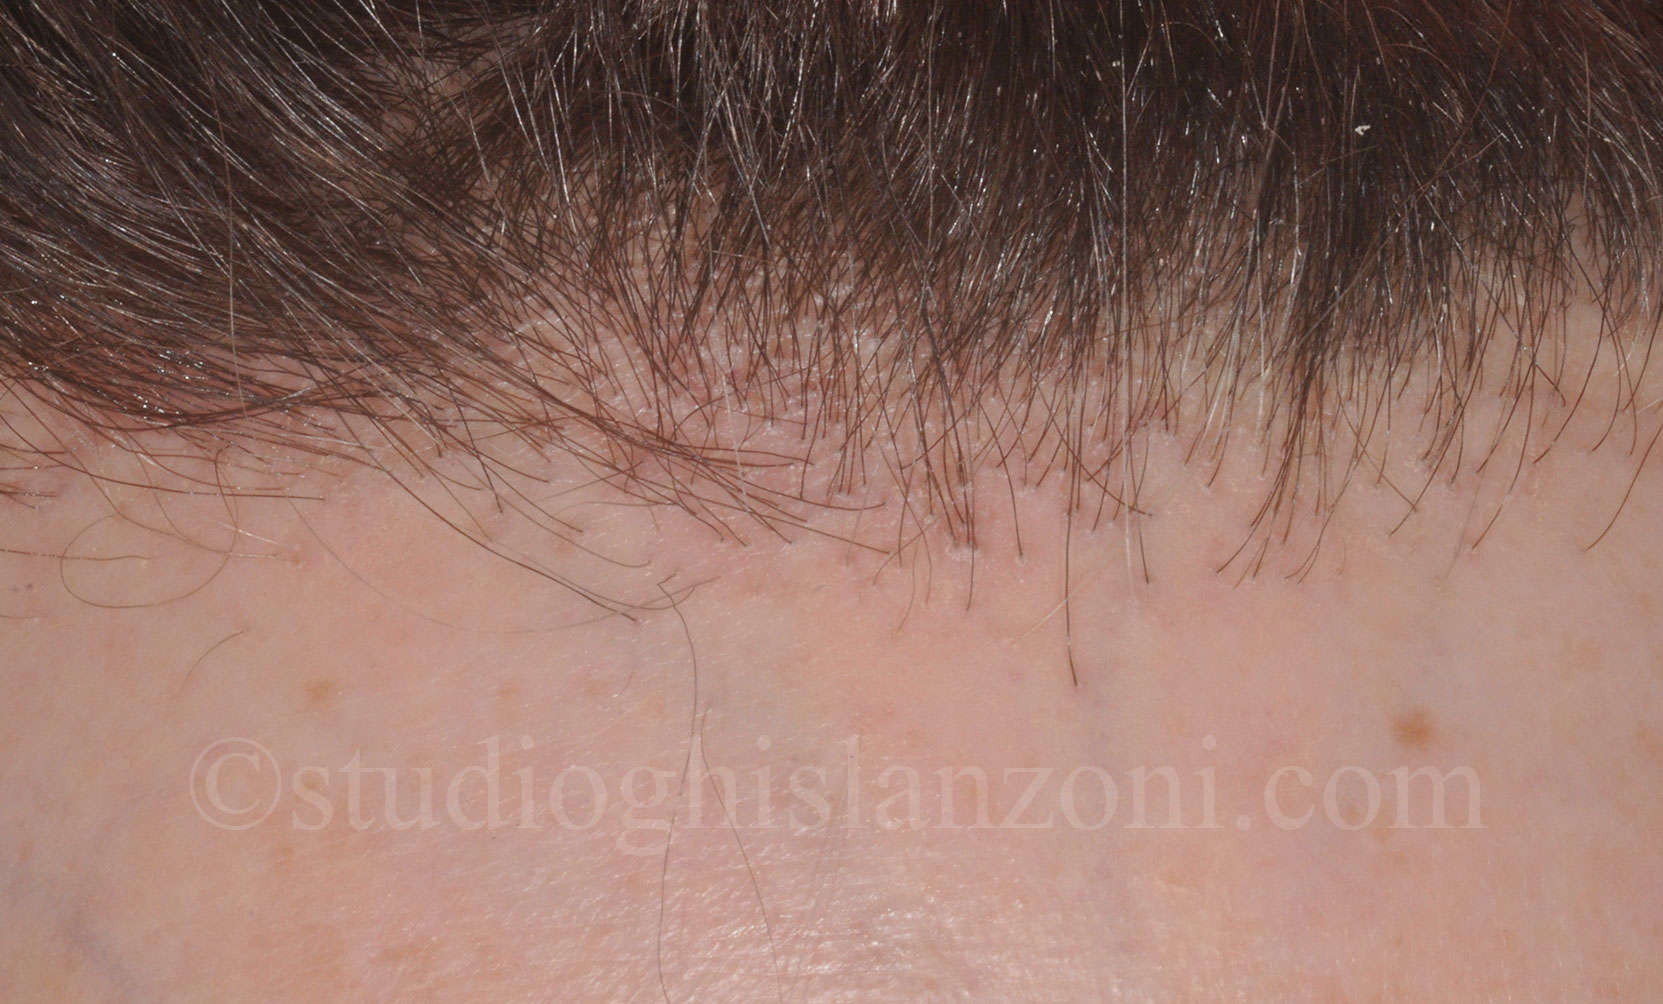 Alopecia-cicatriziale-Alopecia-fibrosante-frontale.jpg